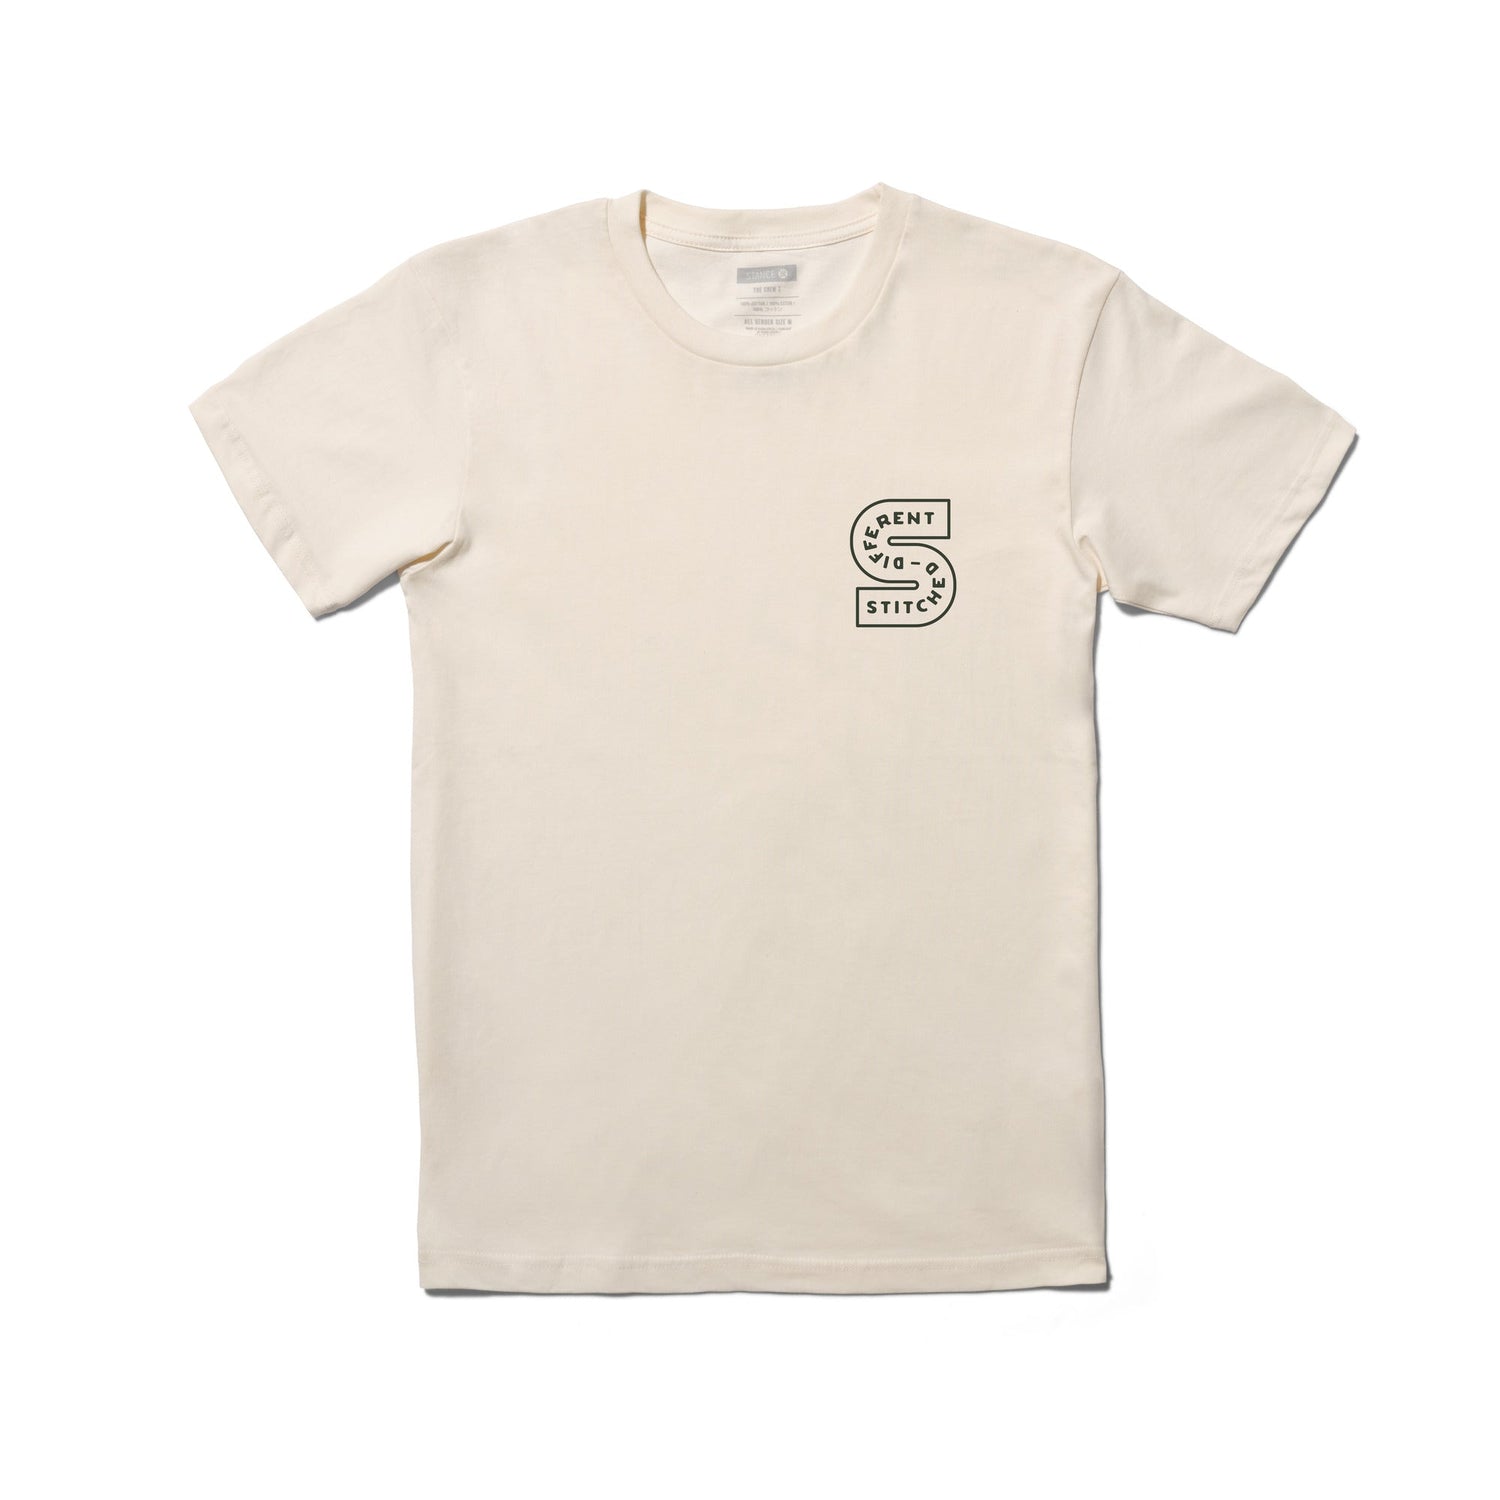 Stance Big S T-Shirt Vintage White